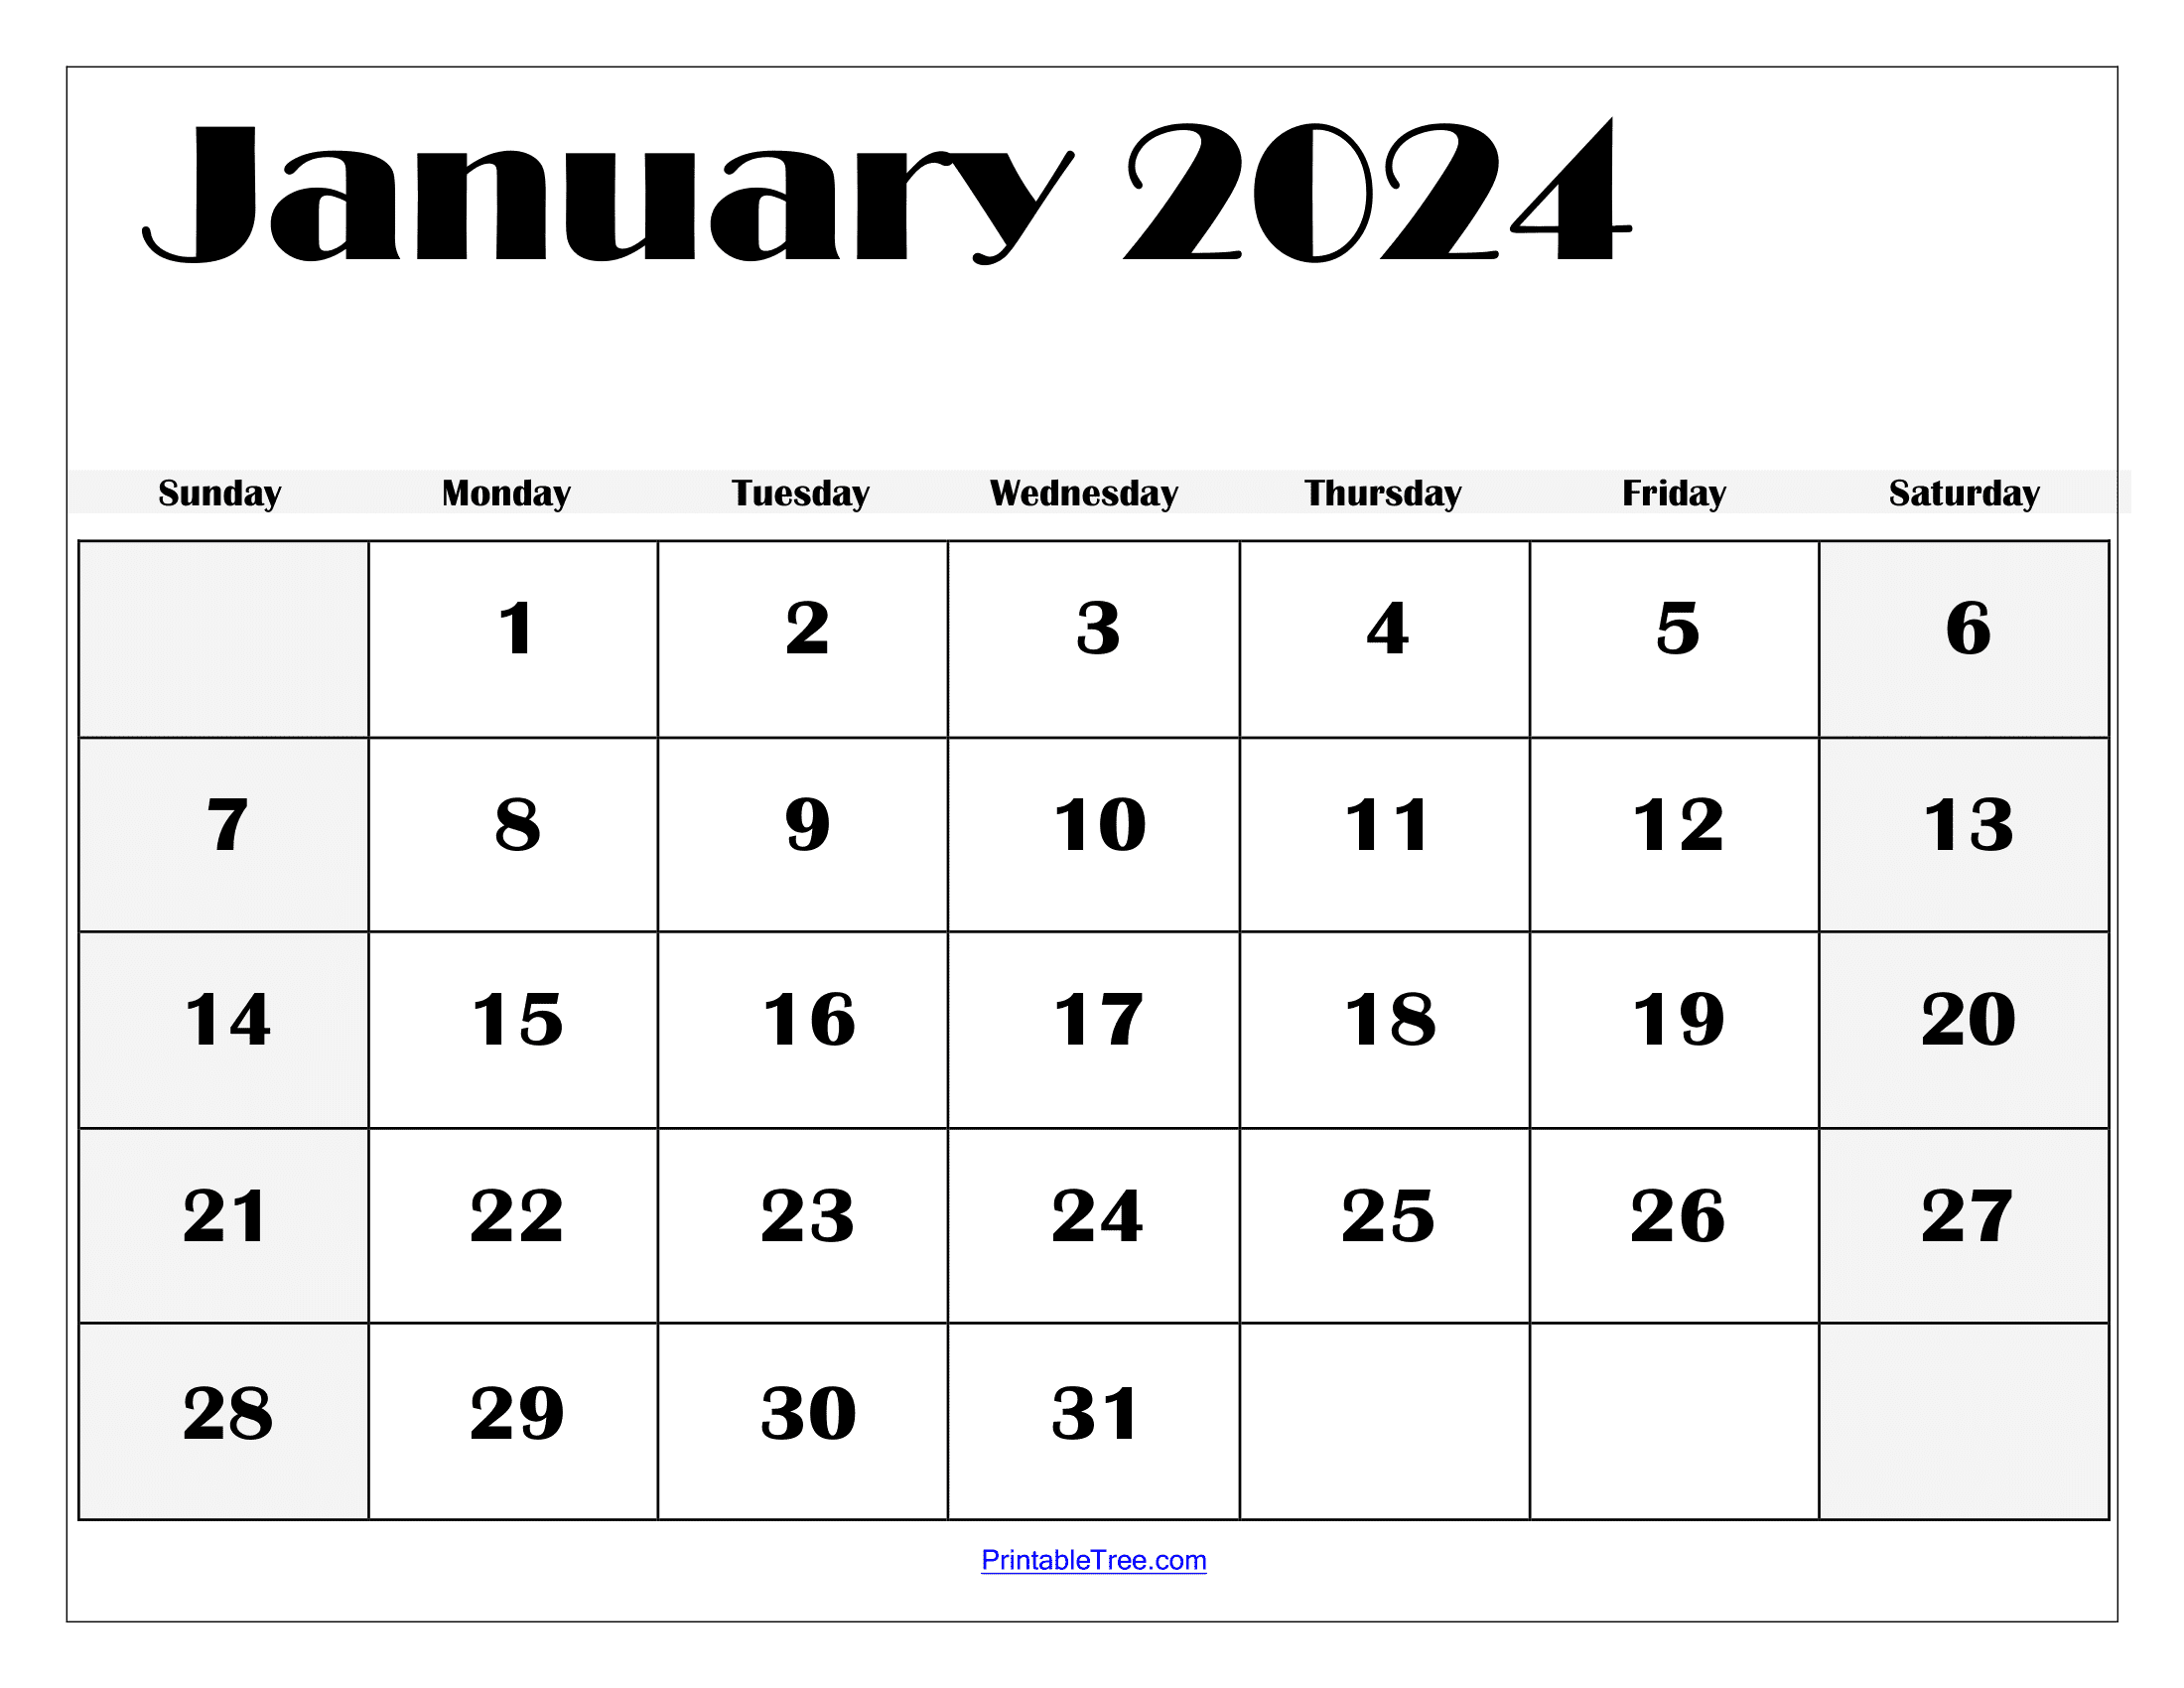 January 2024 Calendar Printable Pdf Template With Holidays for Printable Jan Feb 2024 Calendar